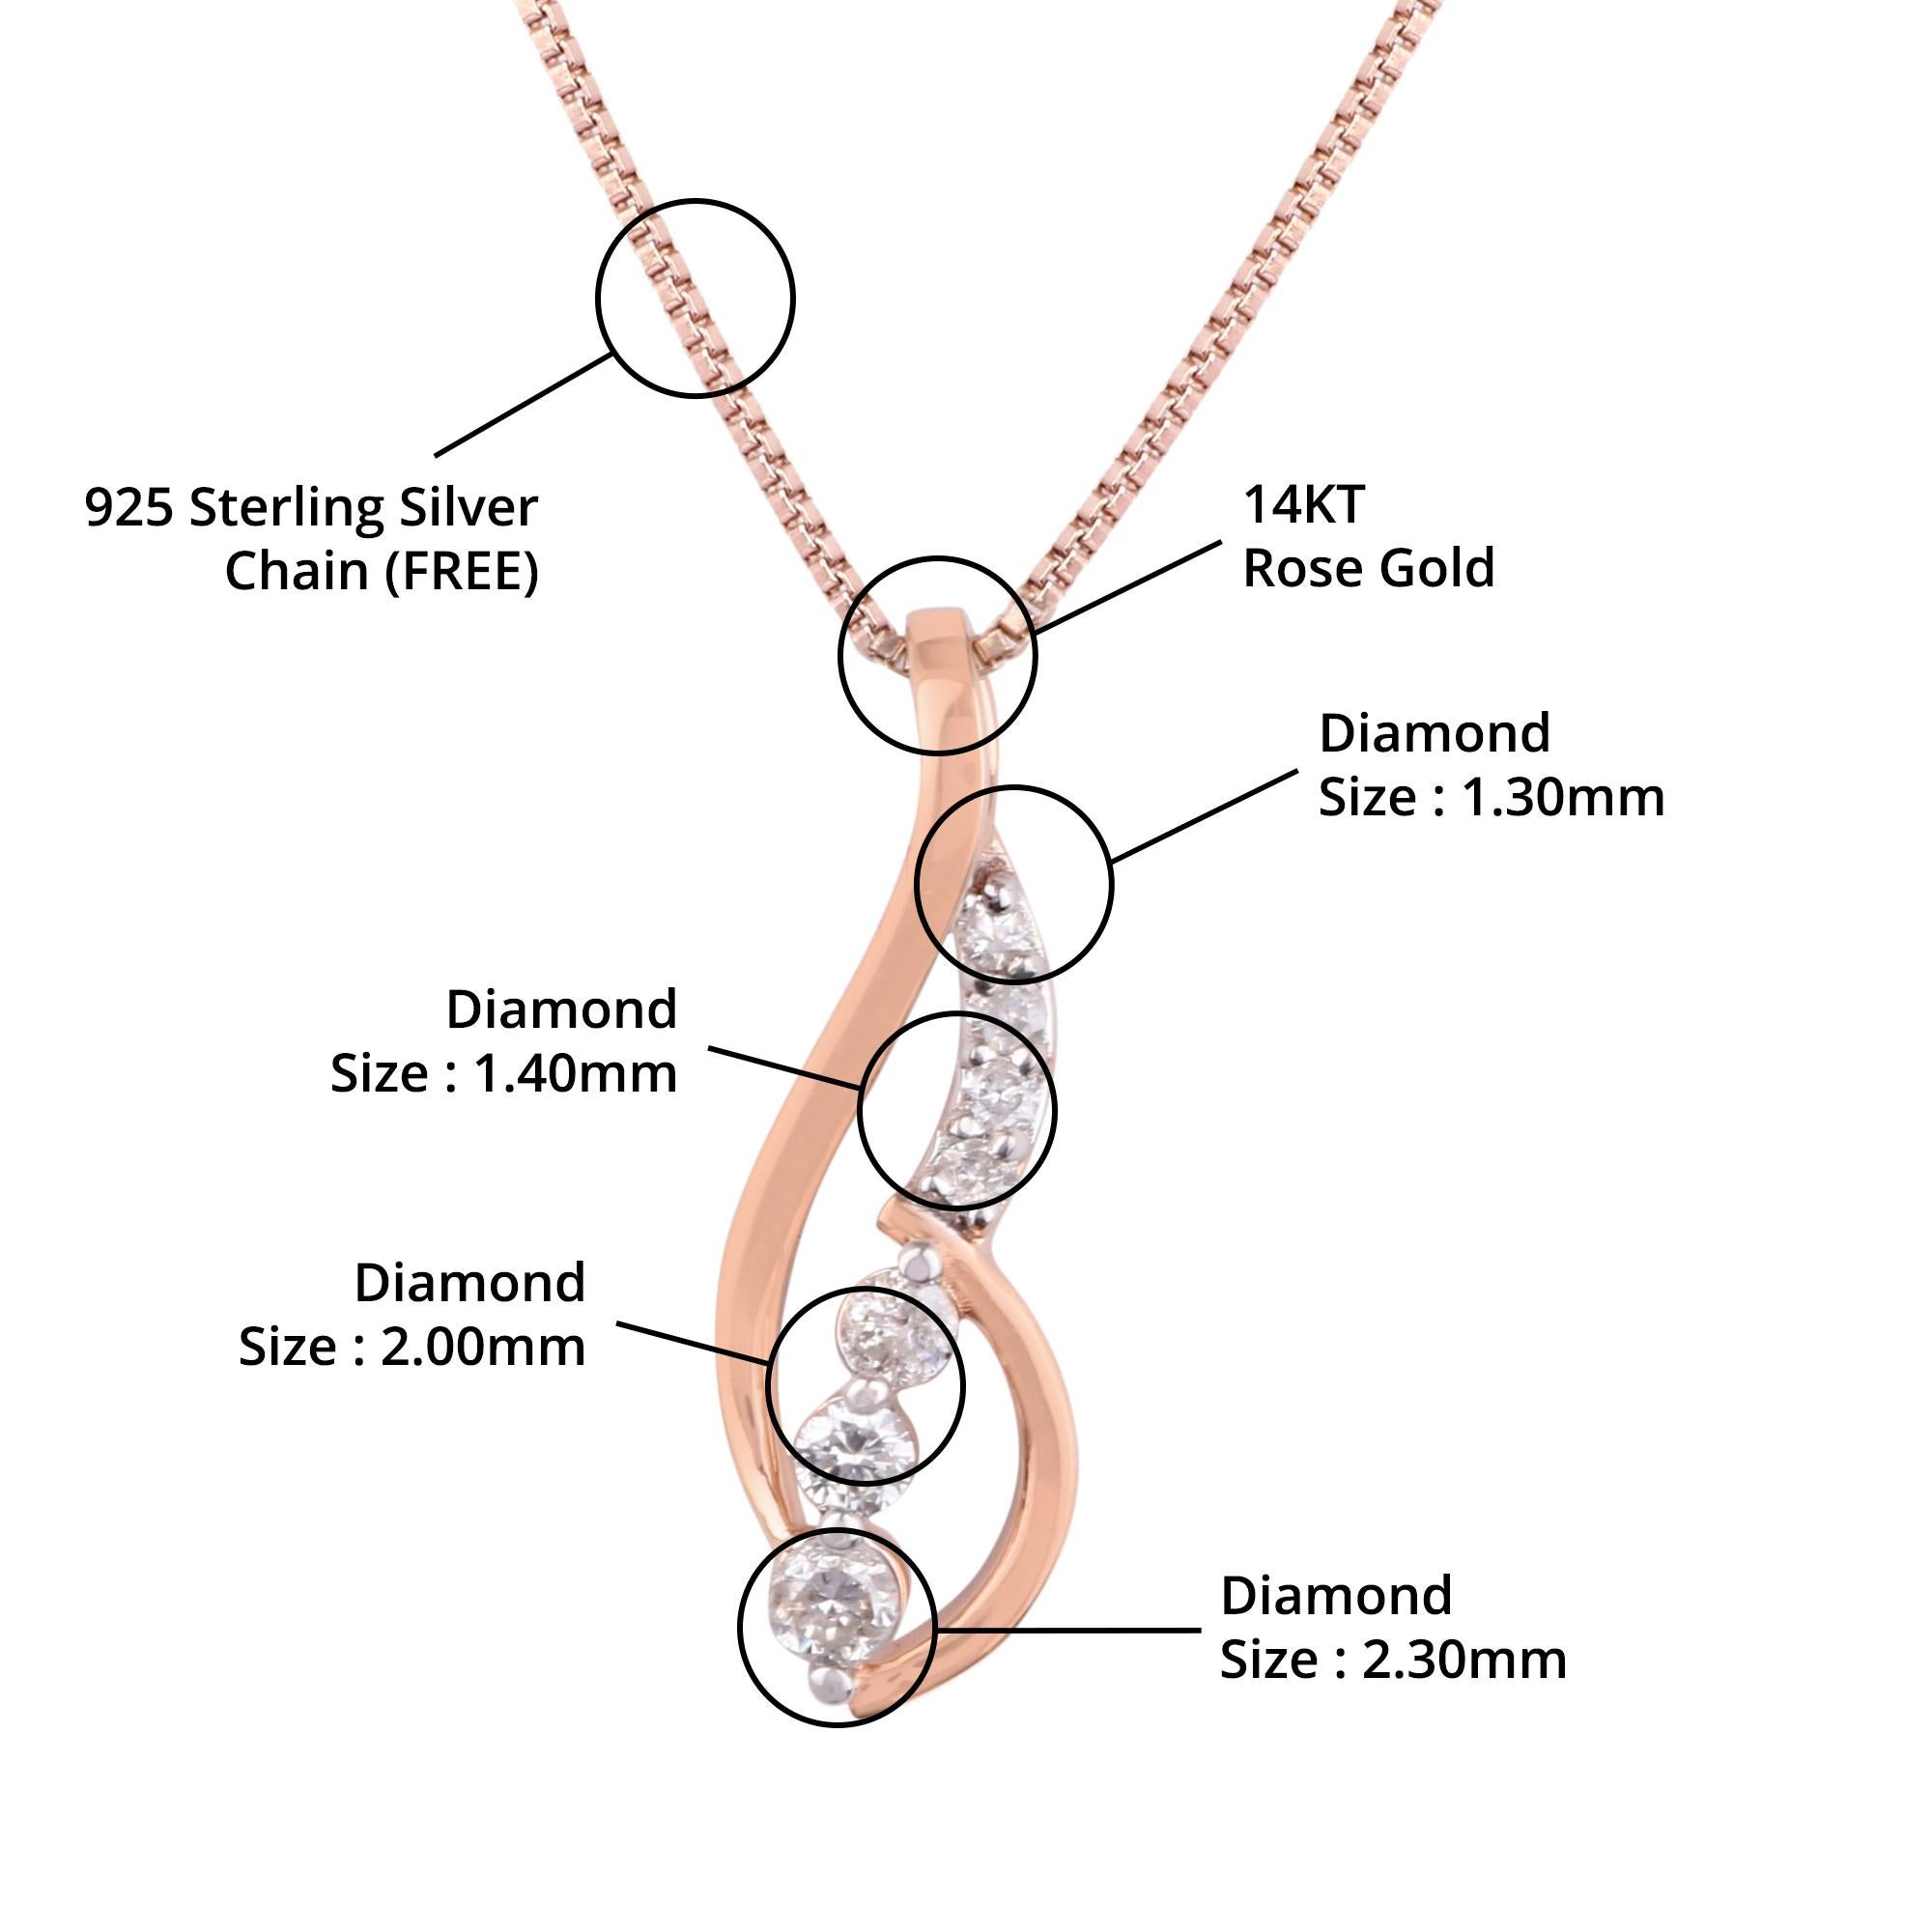 Item details:-

✦ SKU:- JPD00173RRR

✦ Material :- Gold

✦ Metal Purity : 14K Rose Gold 

✦ Gemstone Specification:- 
✧ Clear Diamond Round (l1/H1) - 1.30 mm - 1 Pc
✧ Clear Diamond Round (l1/H1) - 1.40 mm - 3 Pcs
✧ Clear Diamond Round (l1/H1) - 2.0